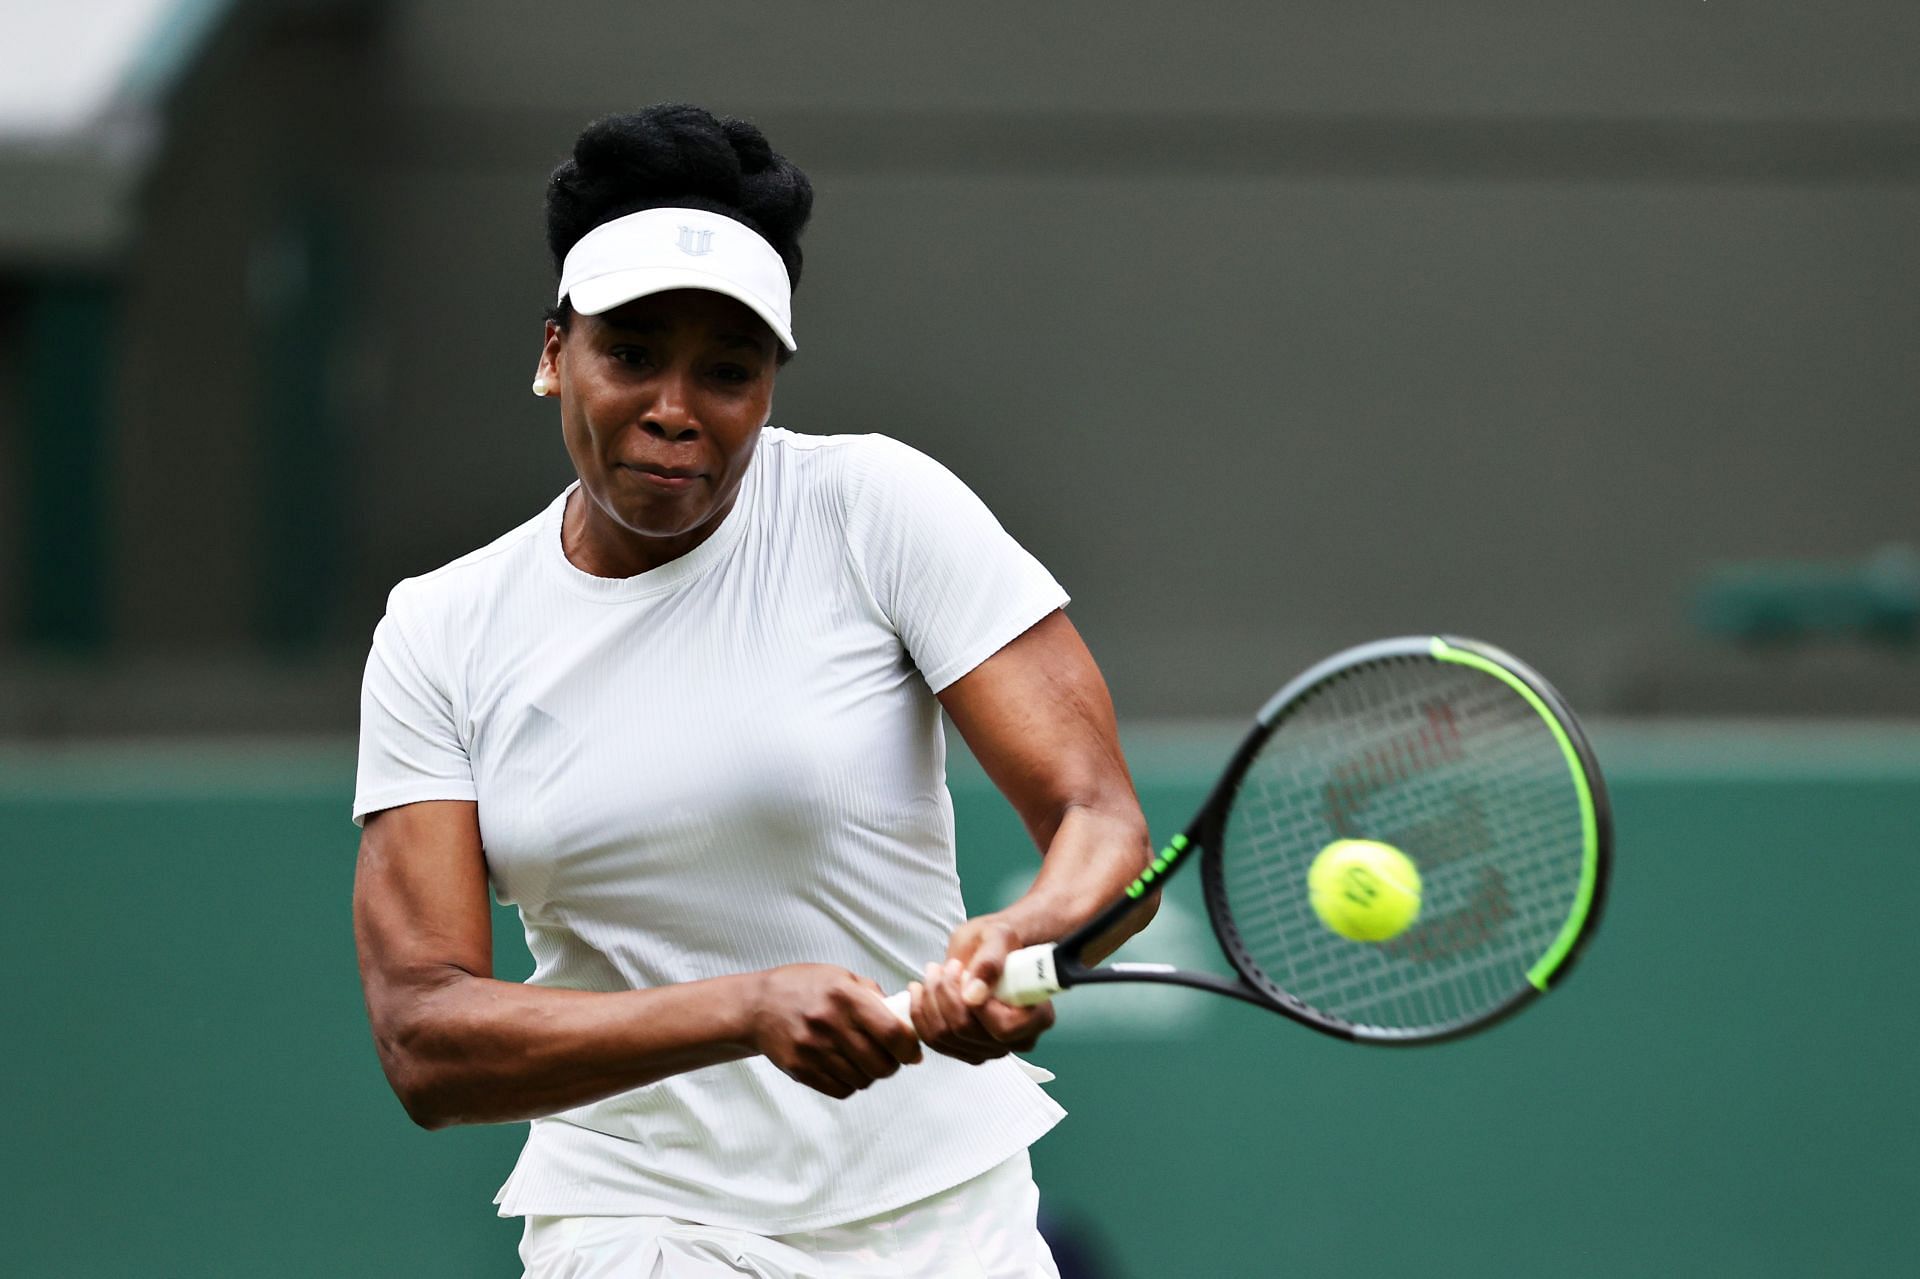 Venus Williams in action in Wimbledon 2021